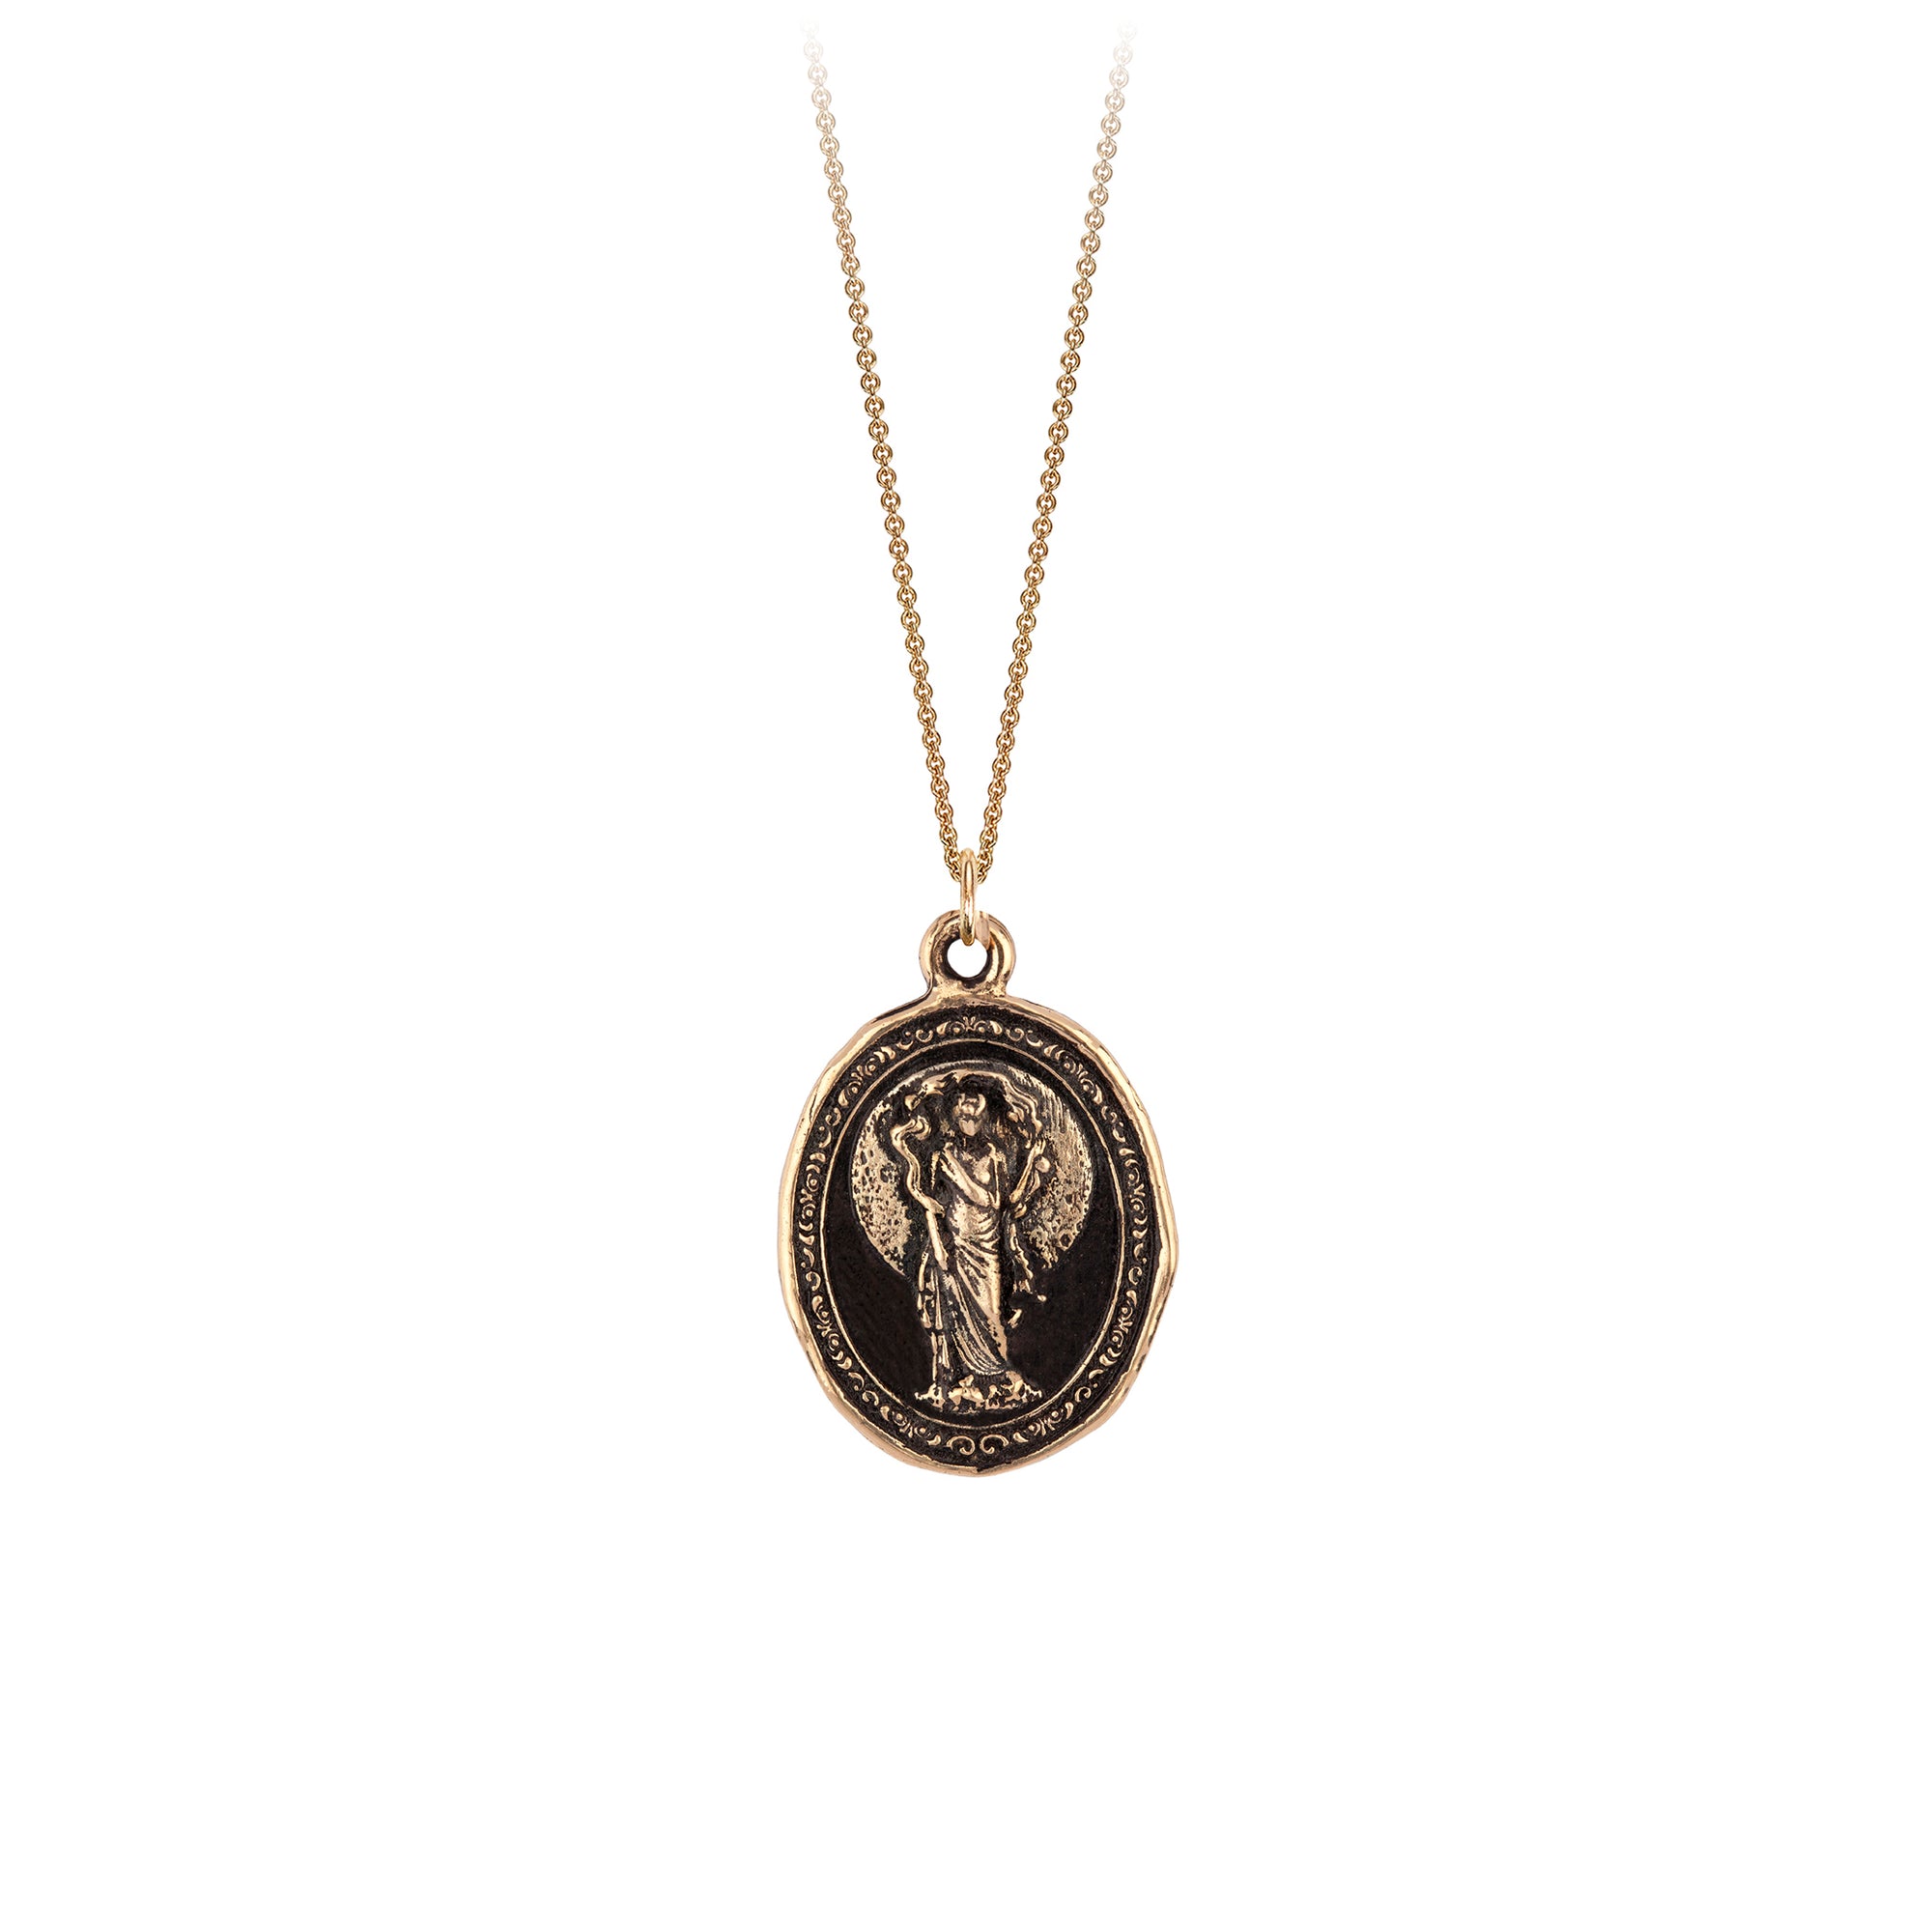 A 14k gold chain featuring our 14k gold Selene goddess talisman.